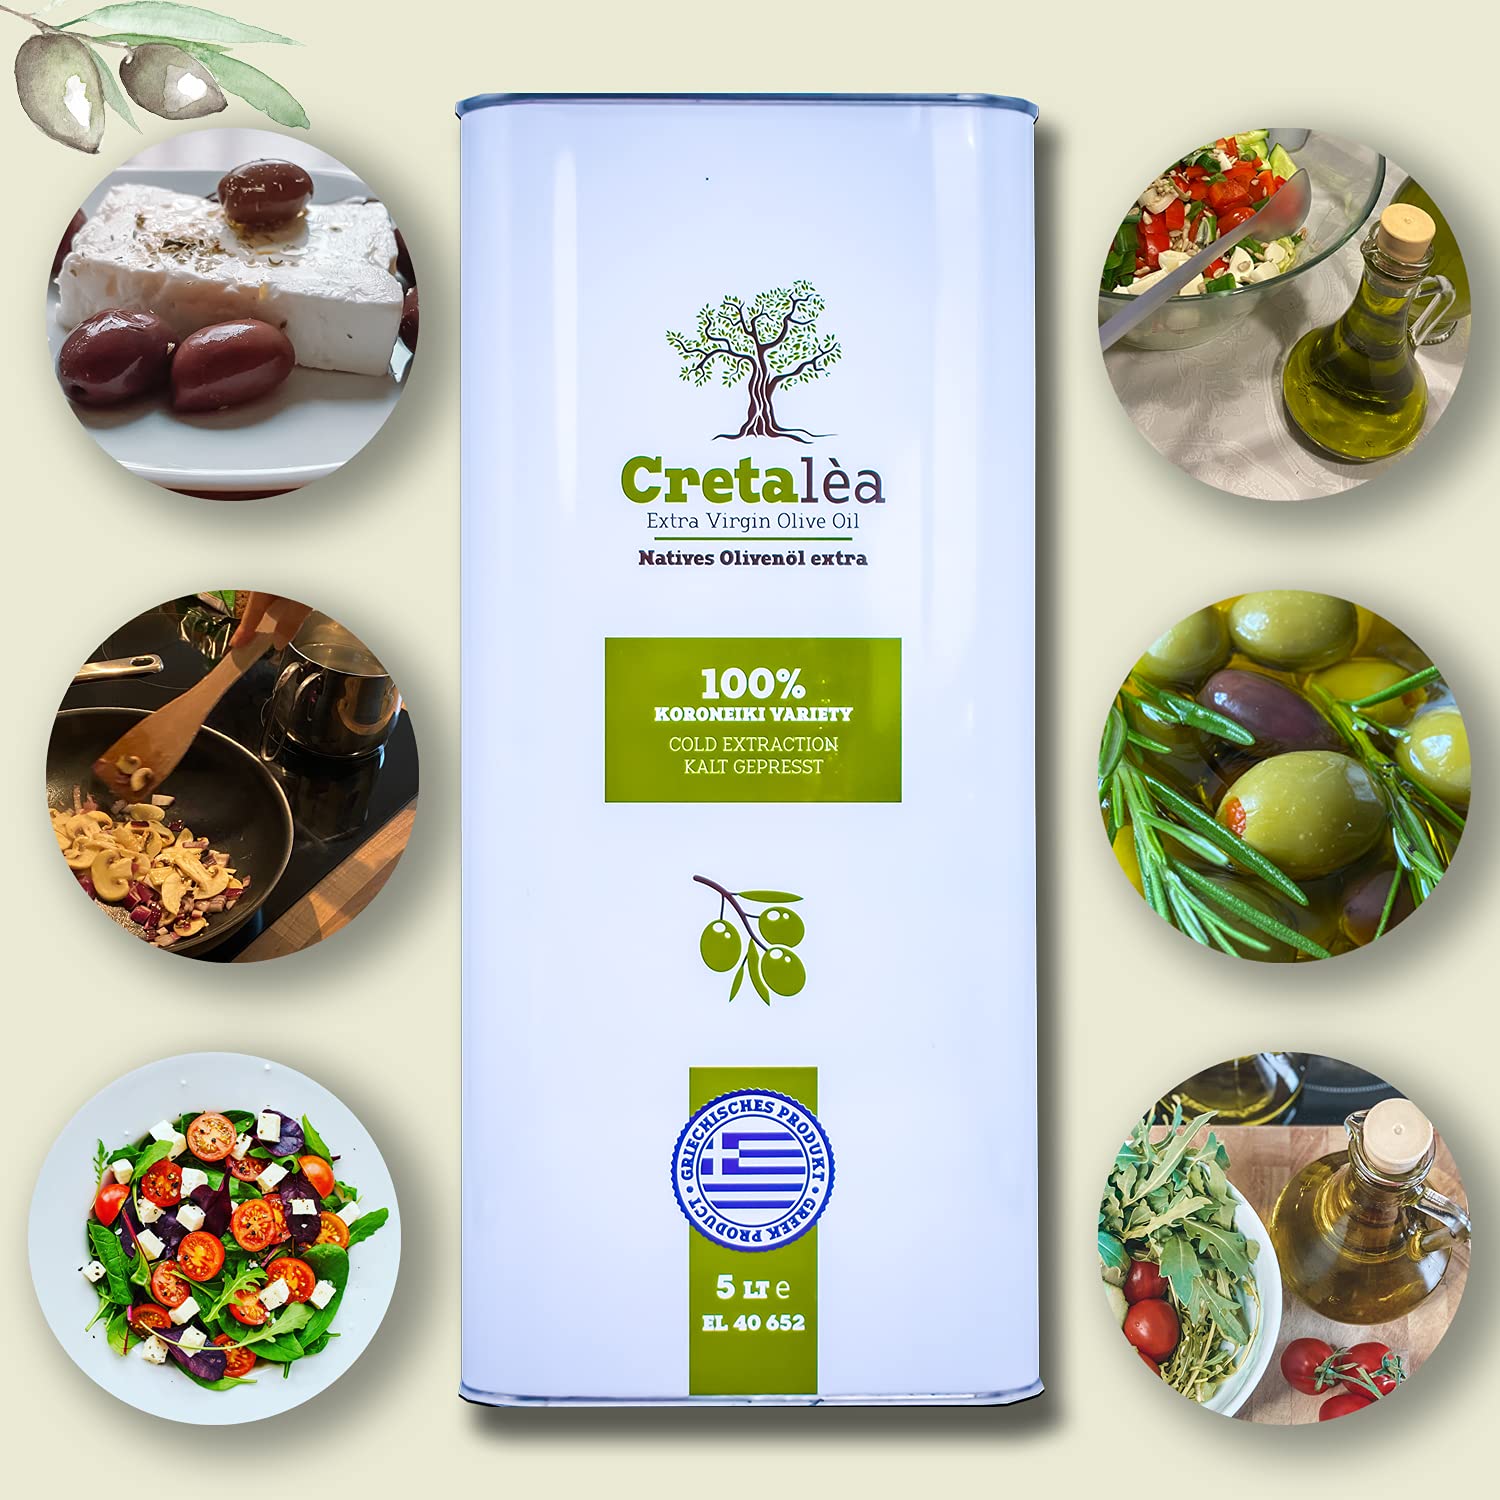 cretalea olivenöl extra virgin